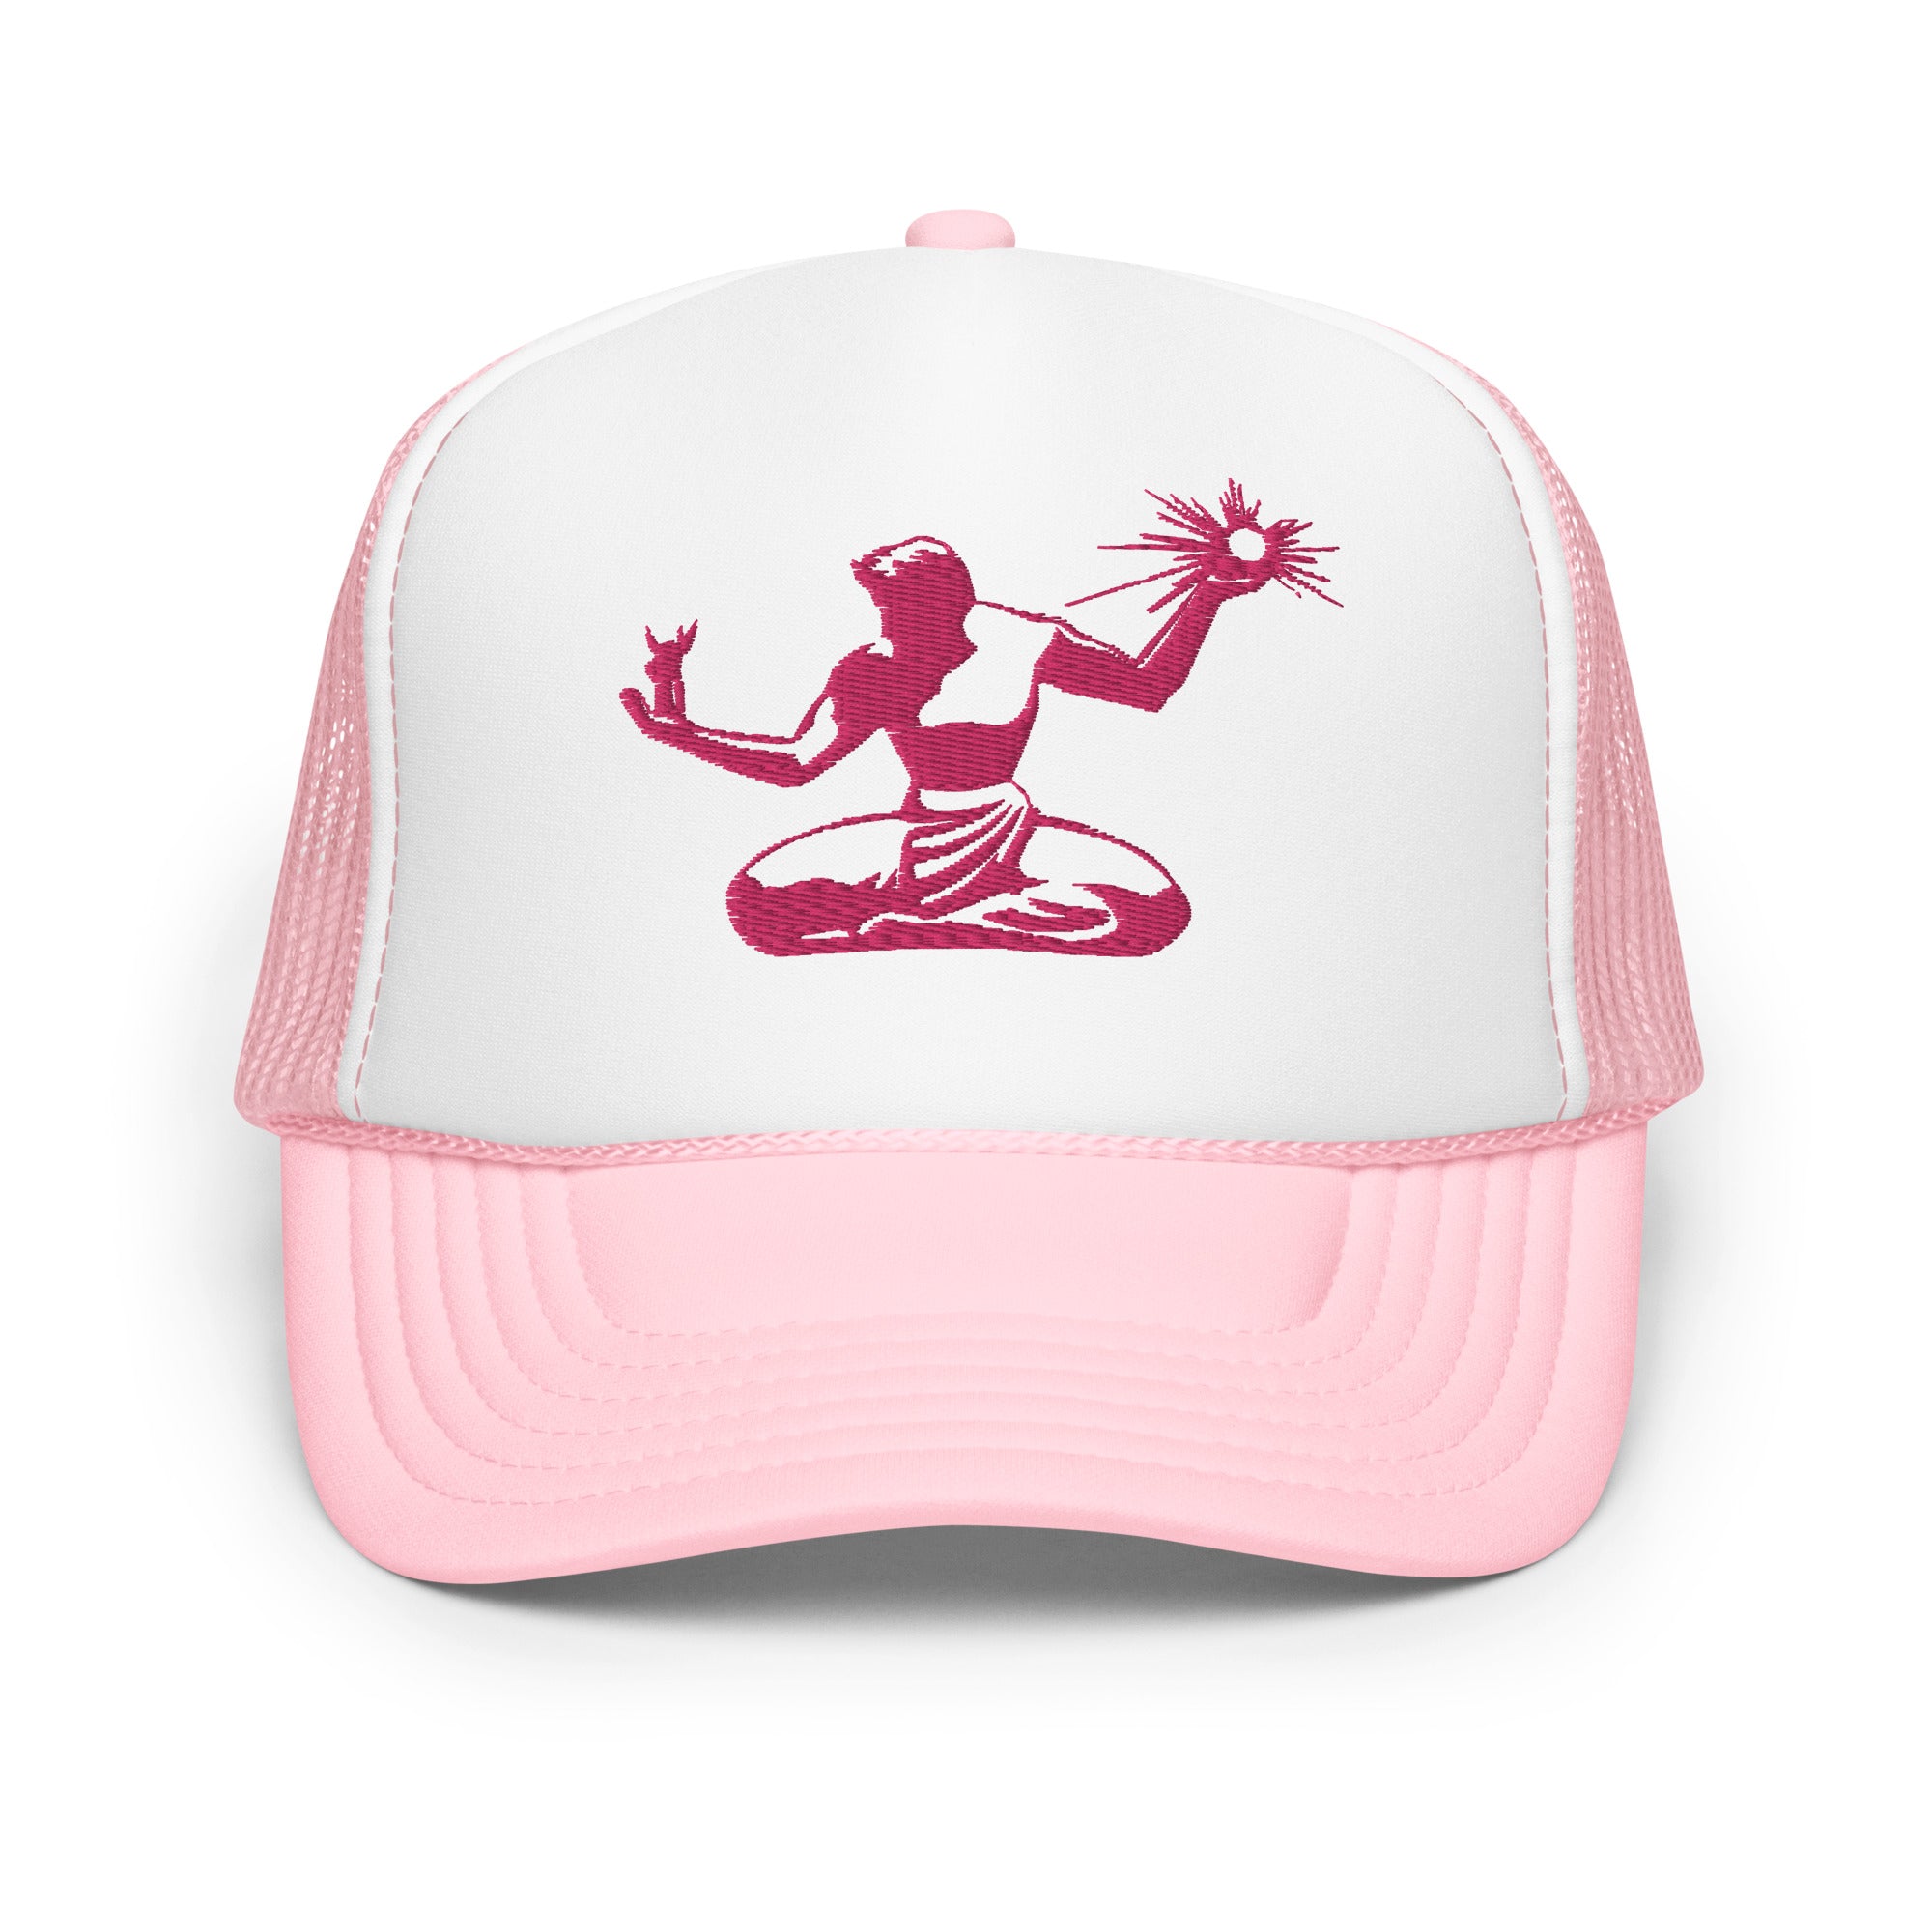 Spirit of Detroit Foam Trucker Hat - Embroidered - Hot Pink / White  Default Title  